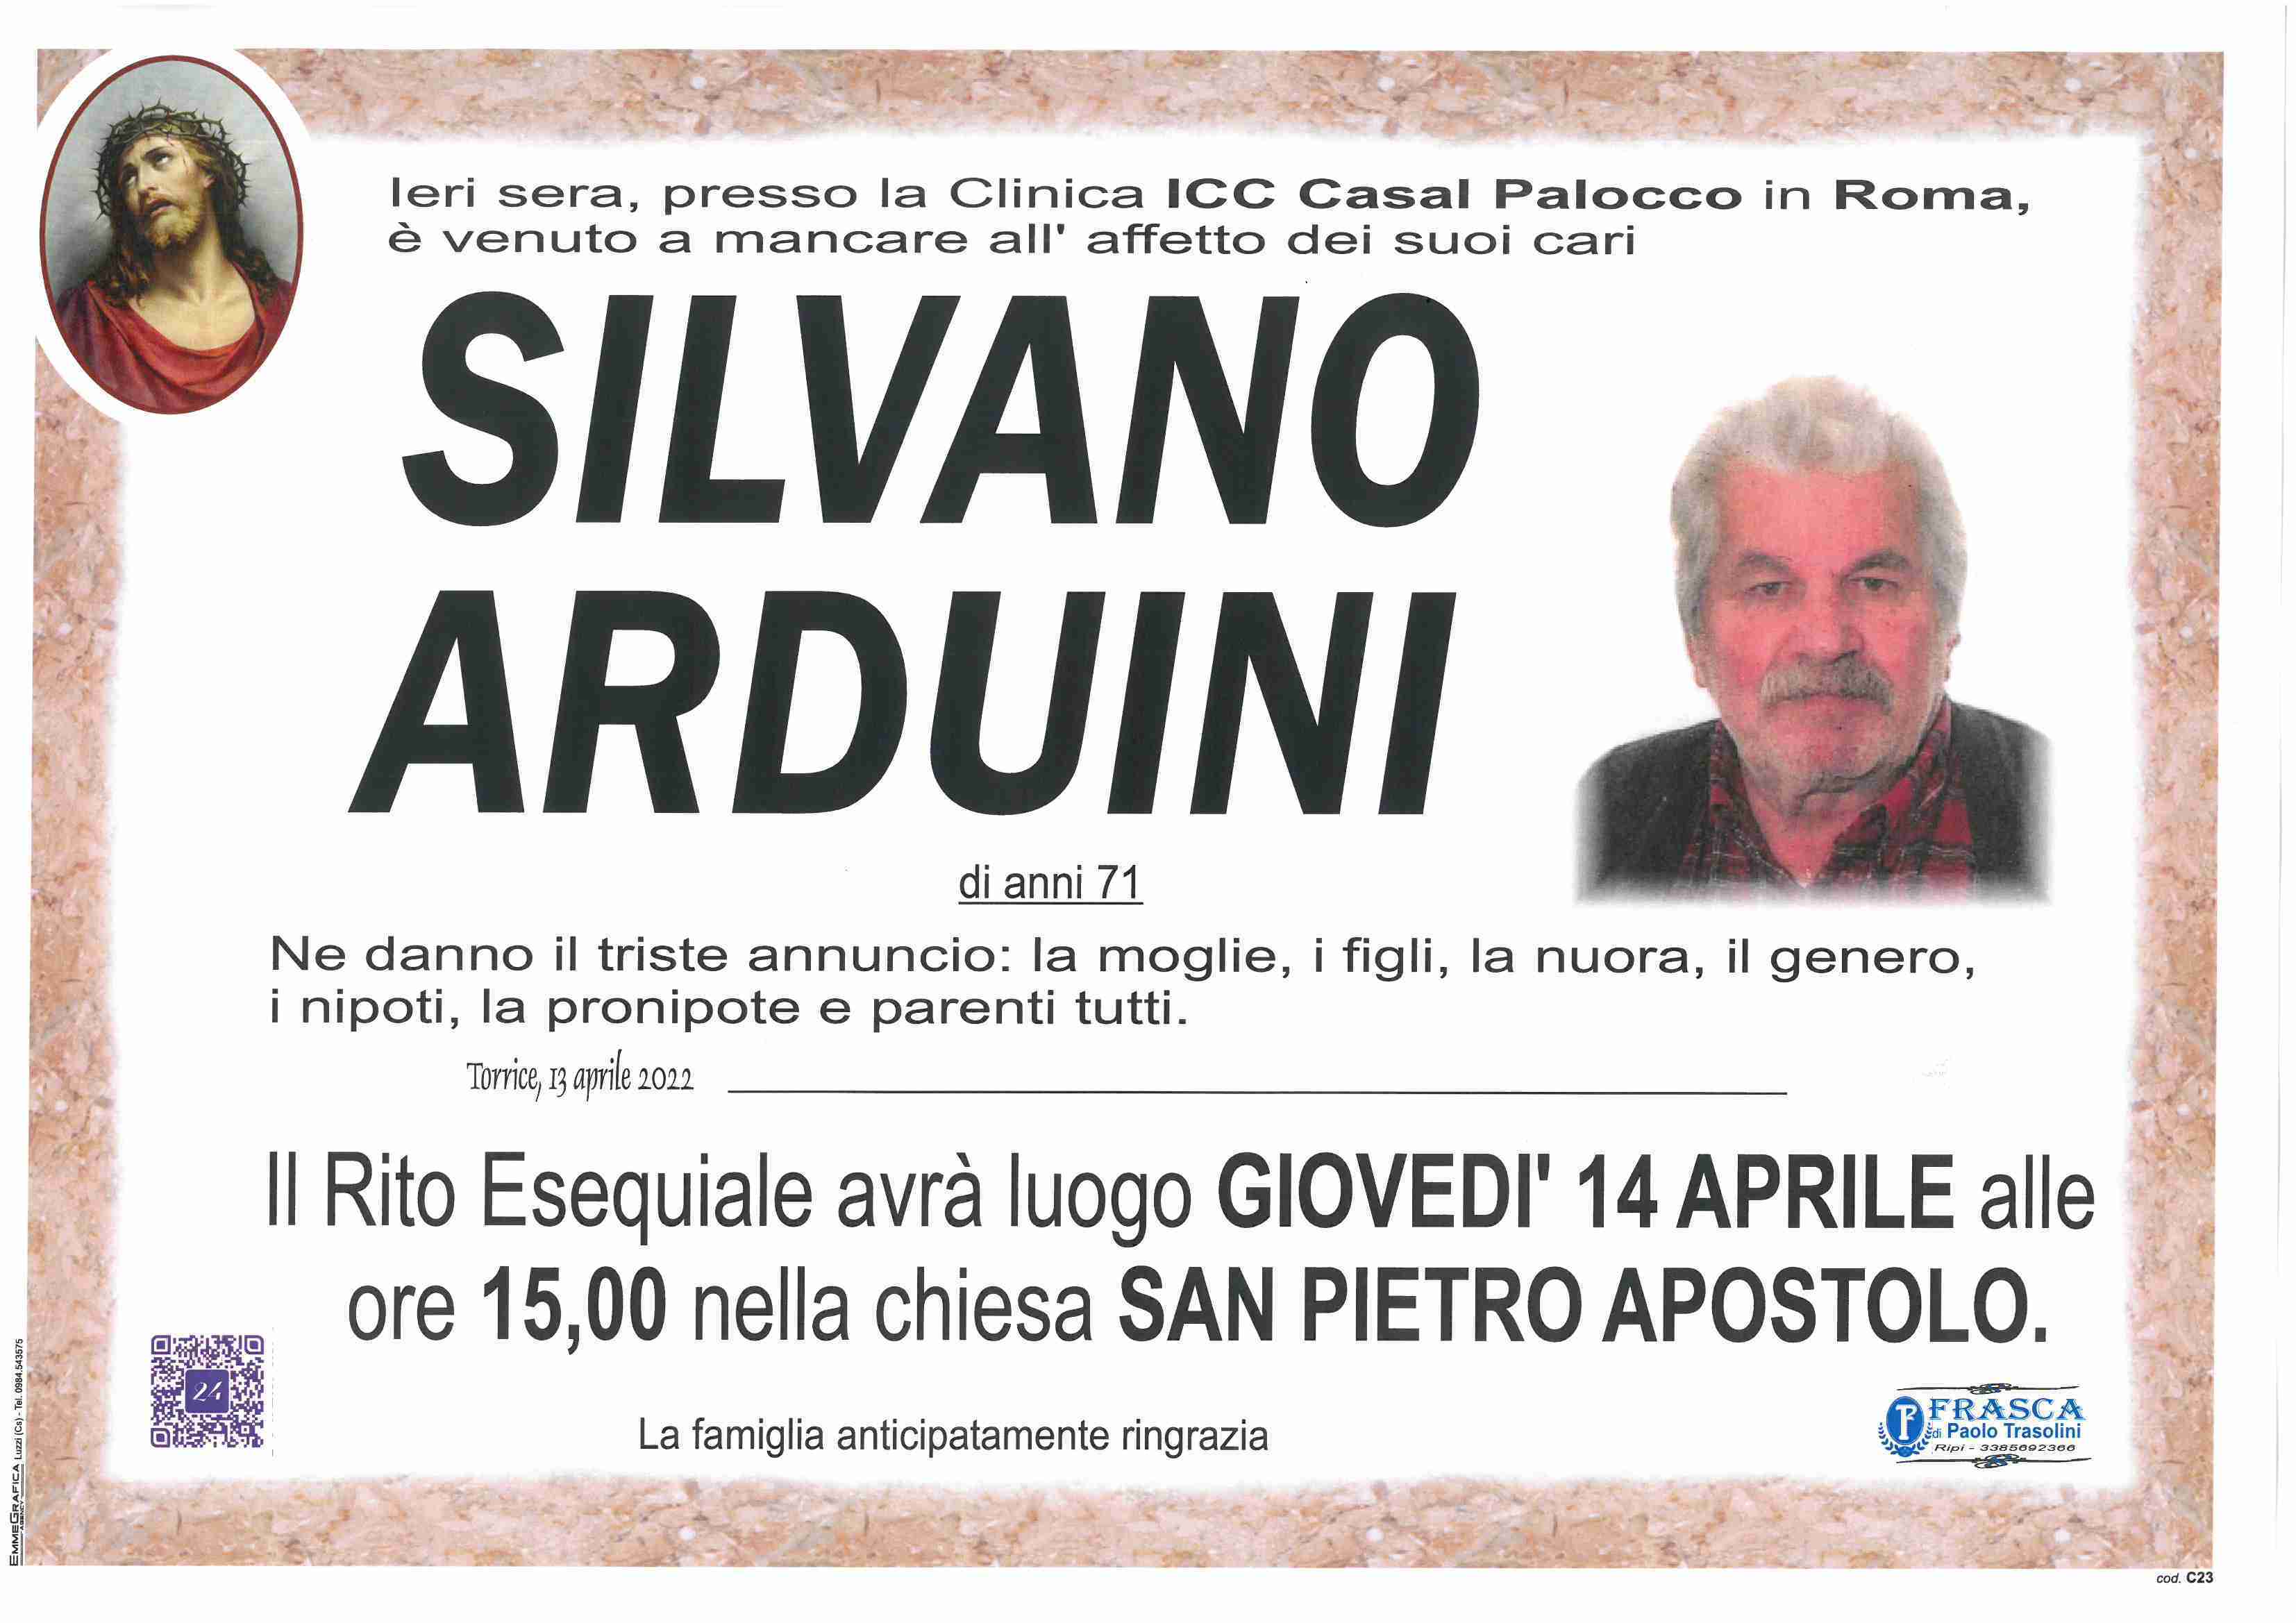 Silvano Arduini